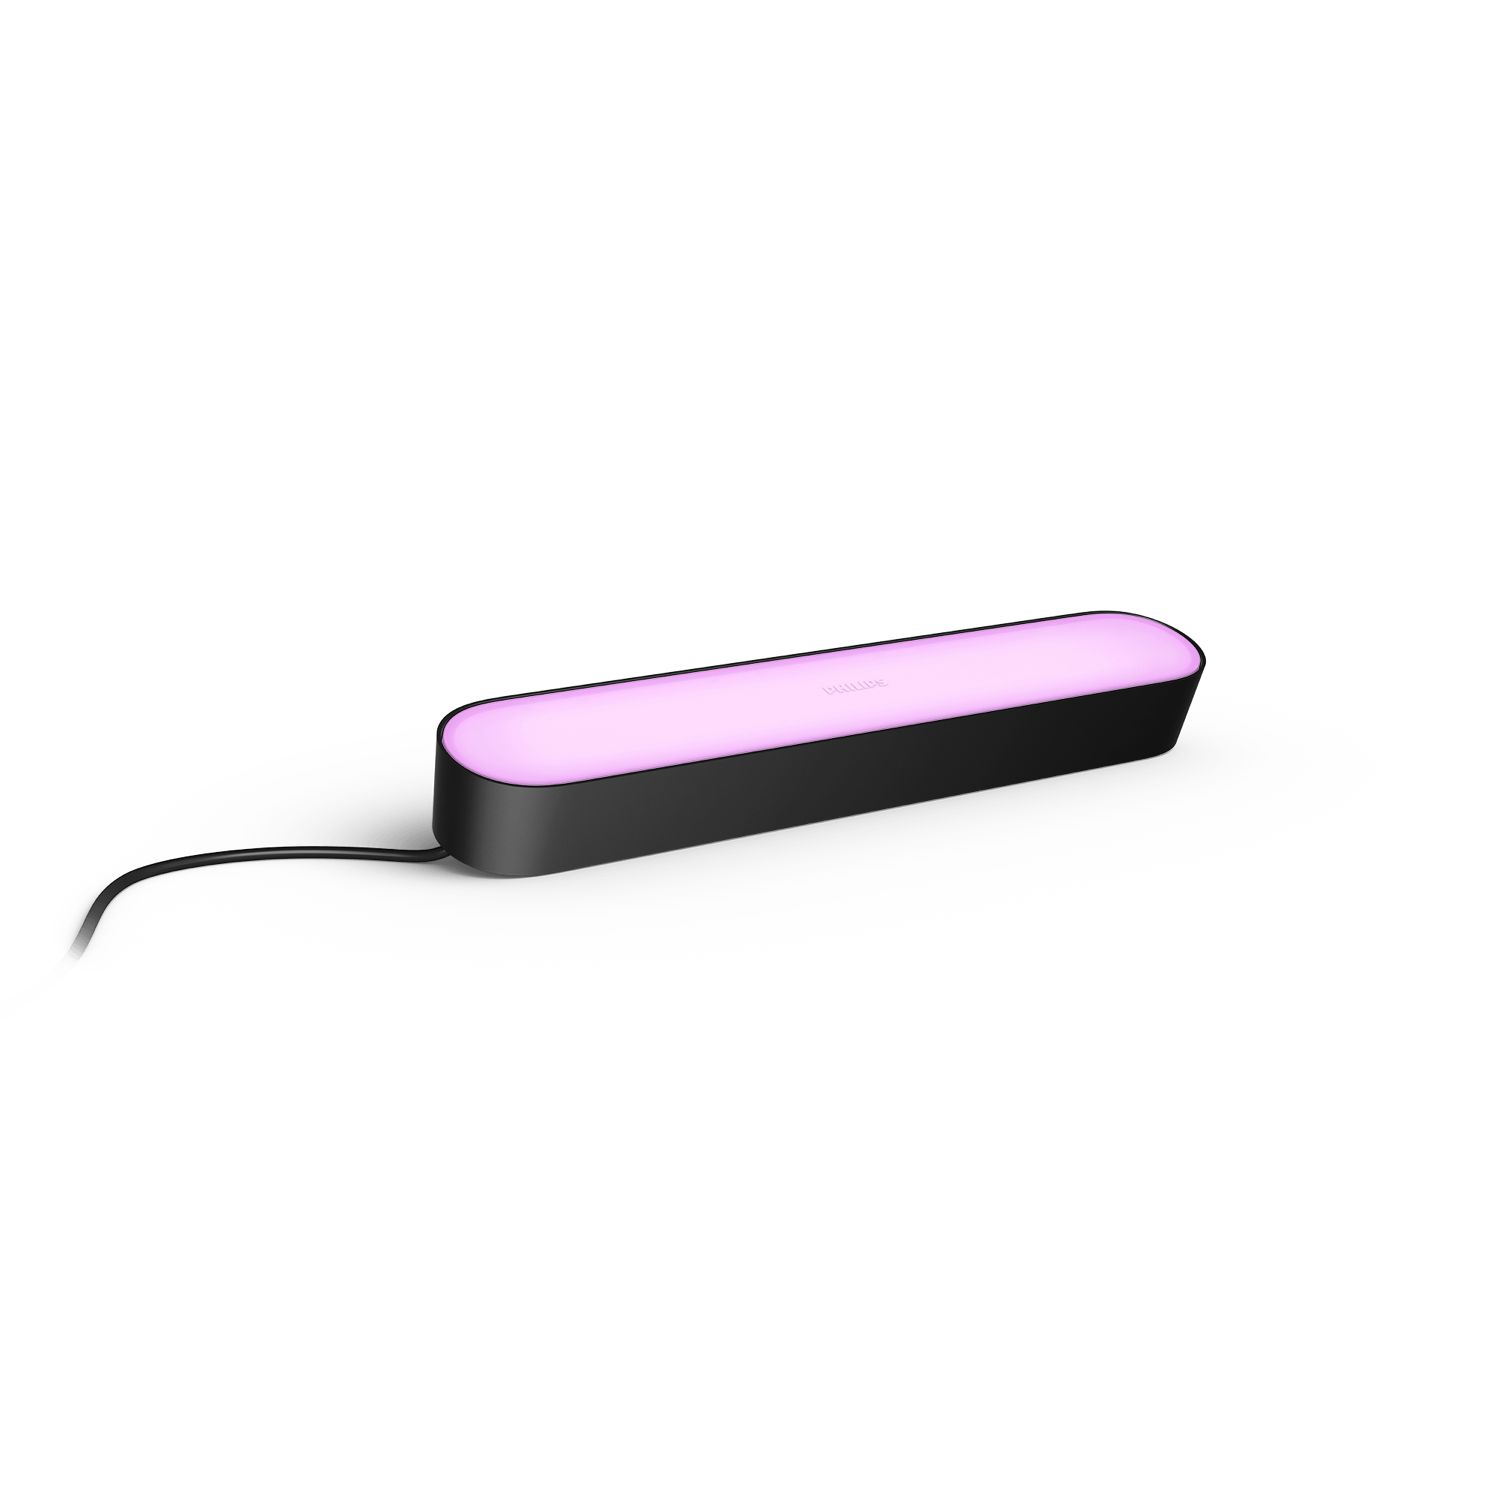 Hue single pack Play light bar – Black | Philips Hue UK